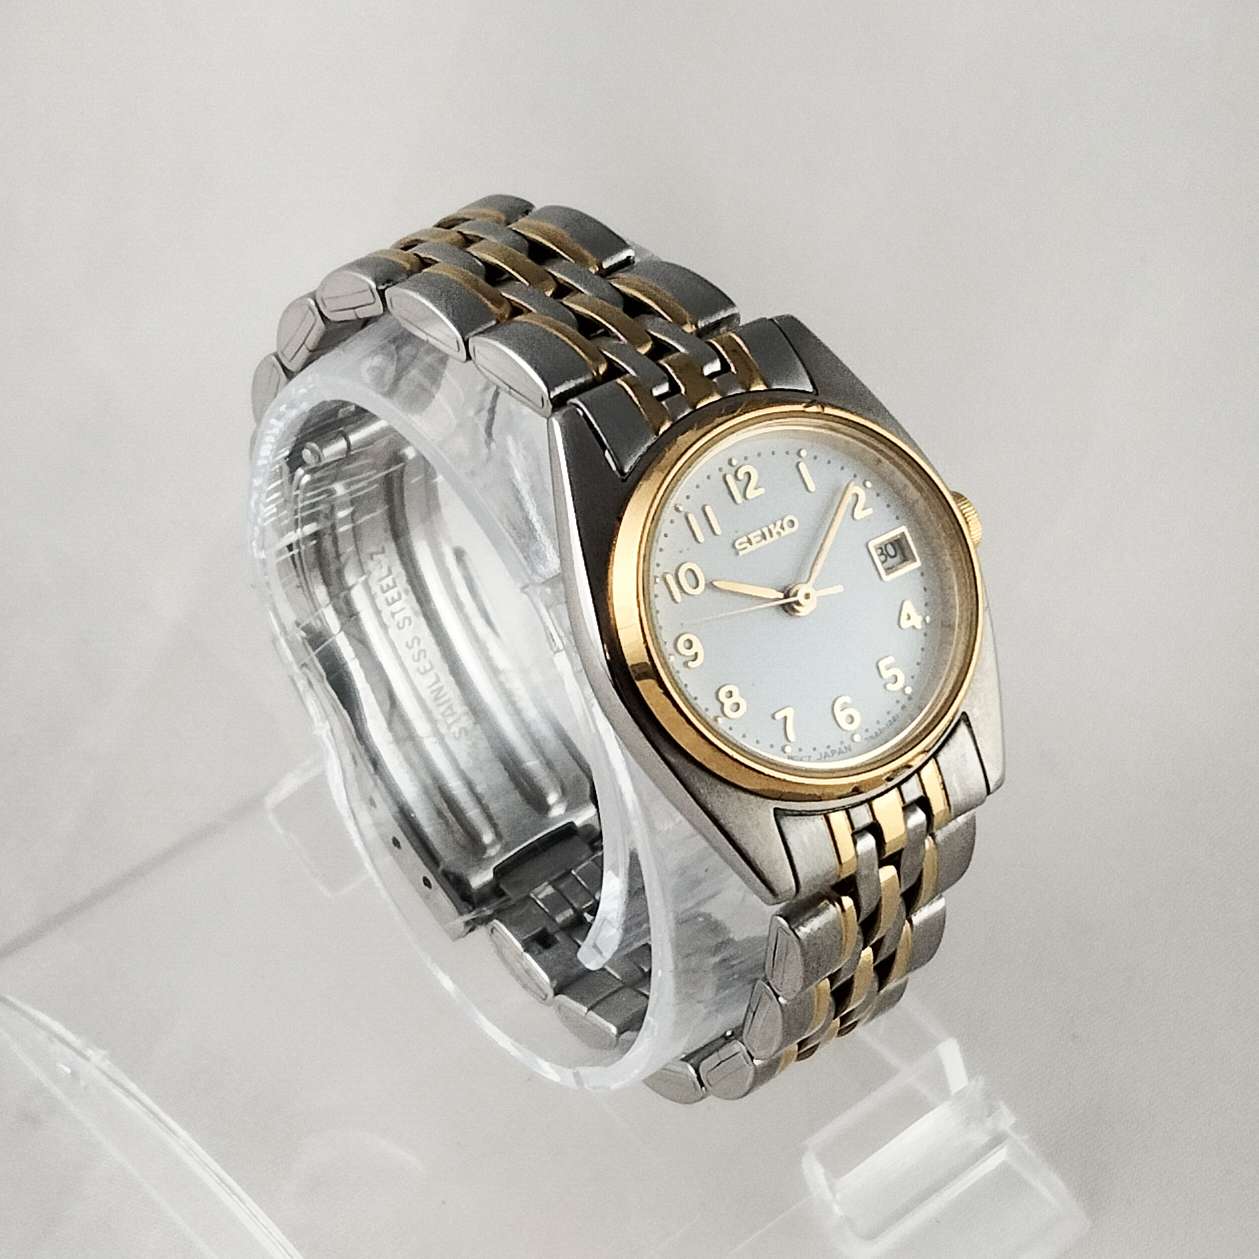 Seiko Watch, White Dial and Gold Tone Details, Bracelet Strap